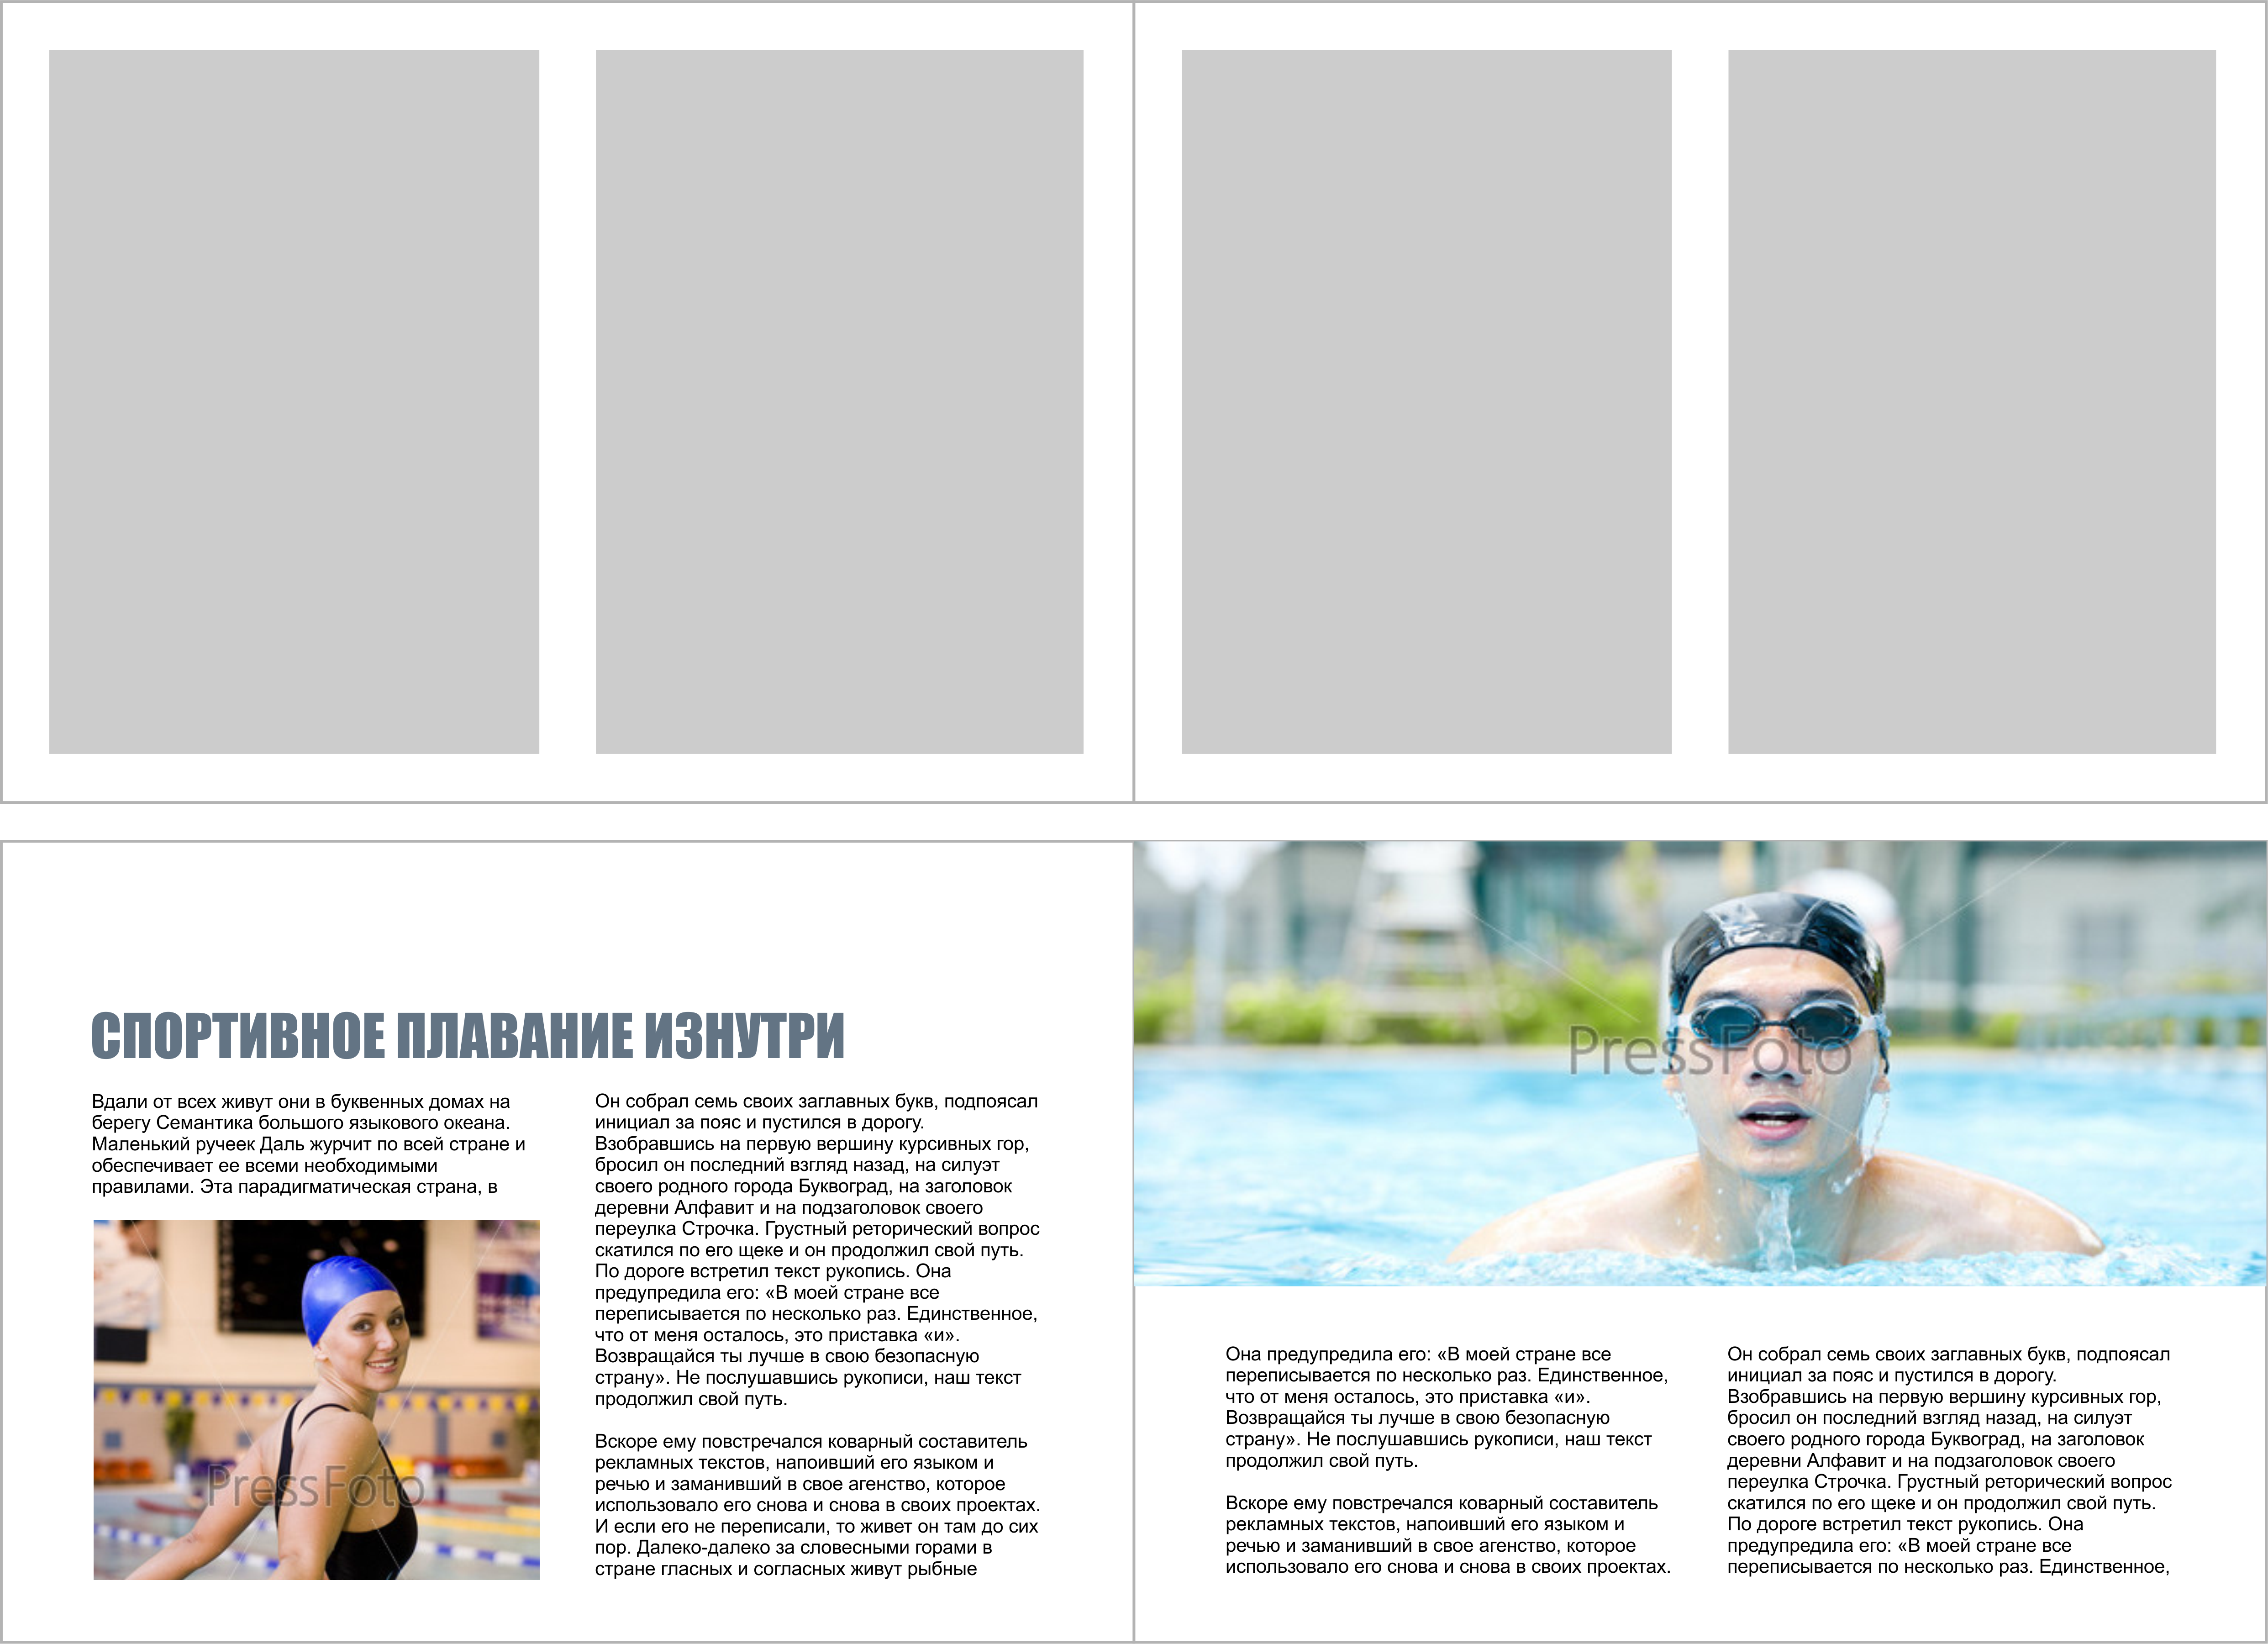 Magazine-page-layout-design-2